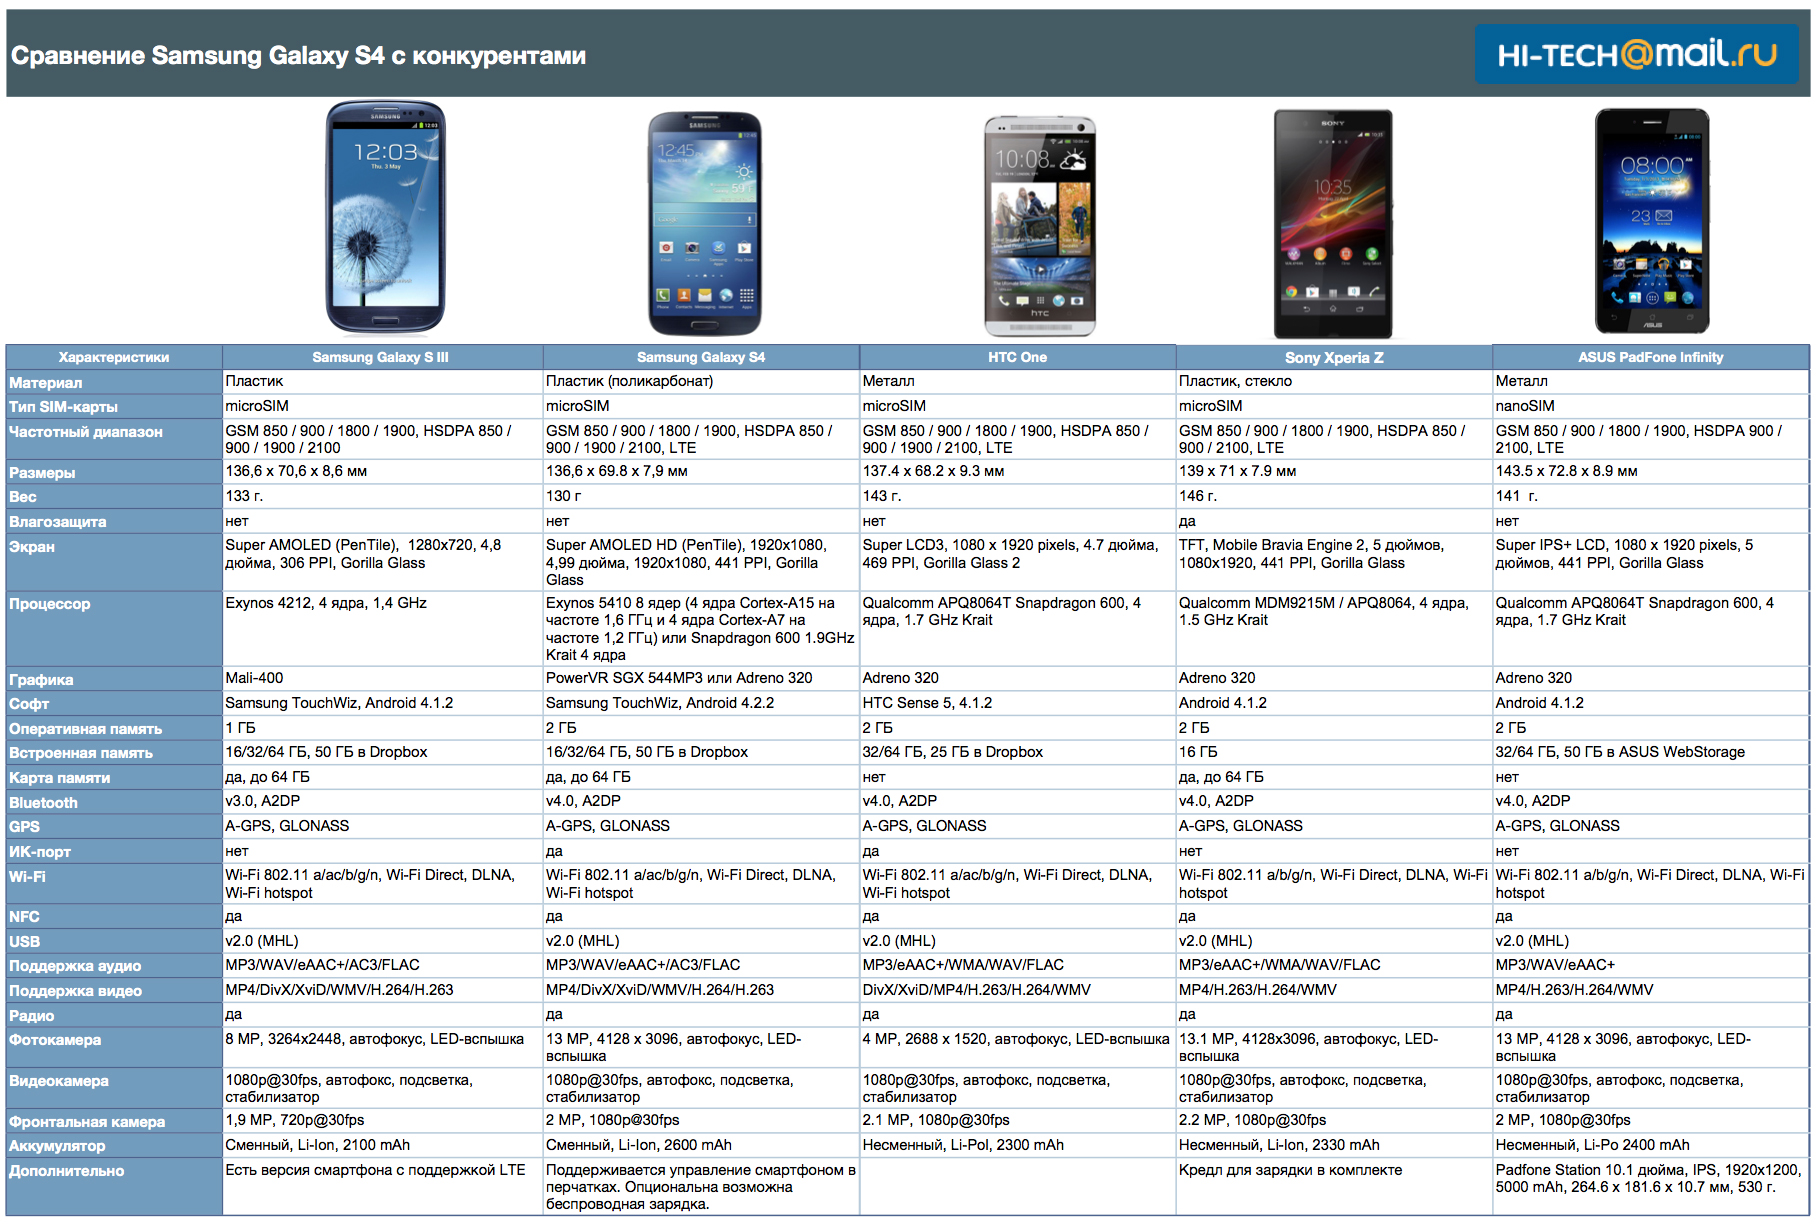 Характеристики смартфонов самсунг галакси в таблице